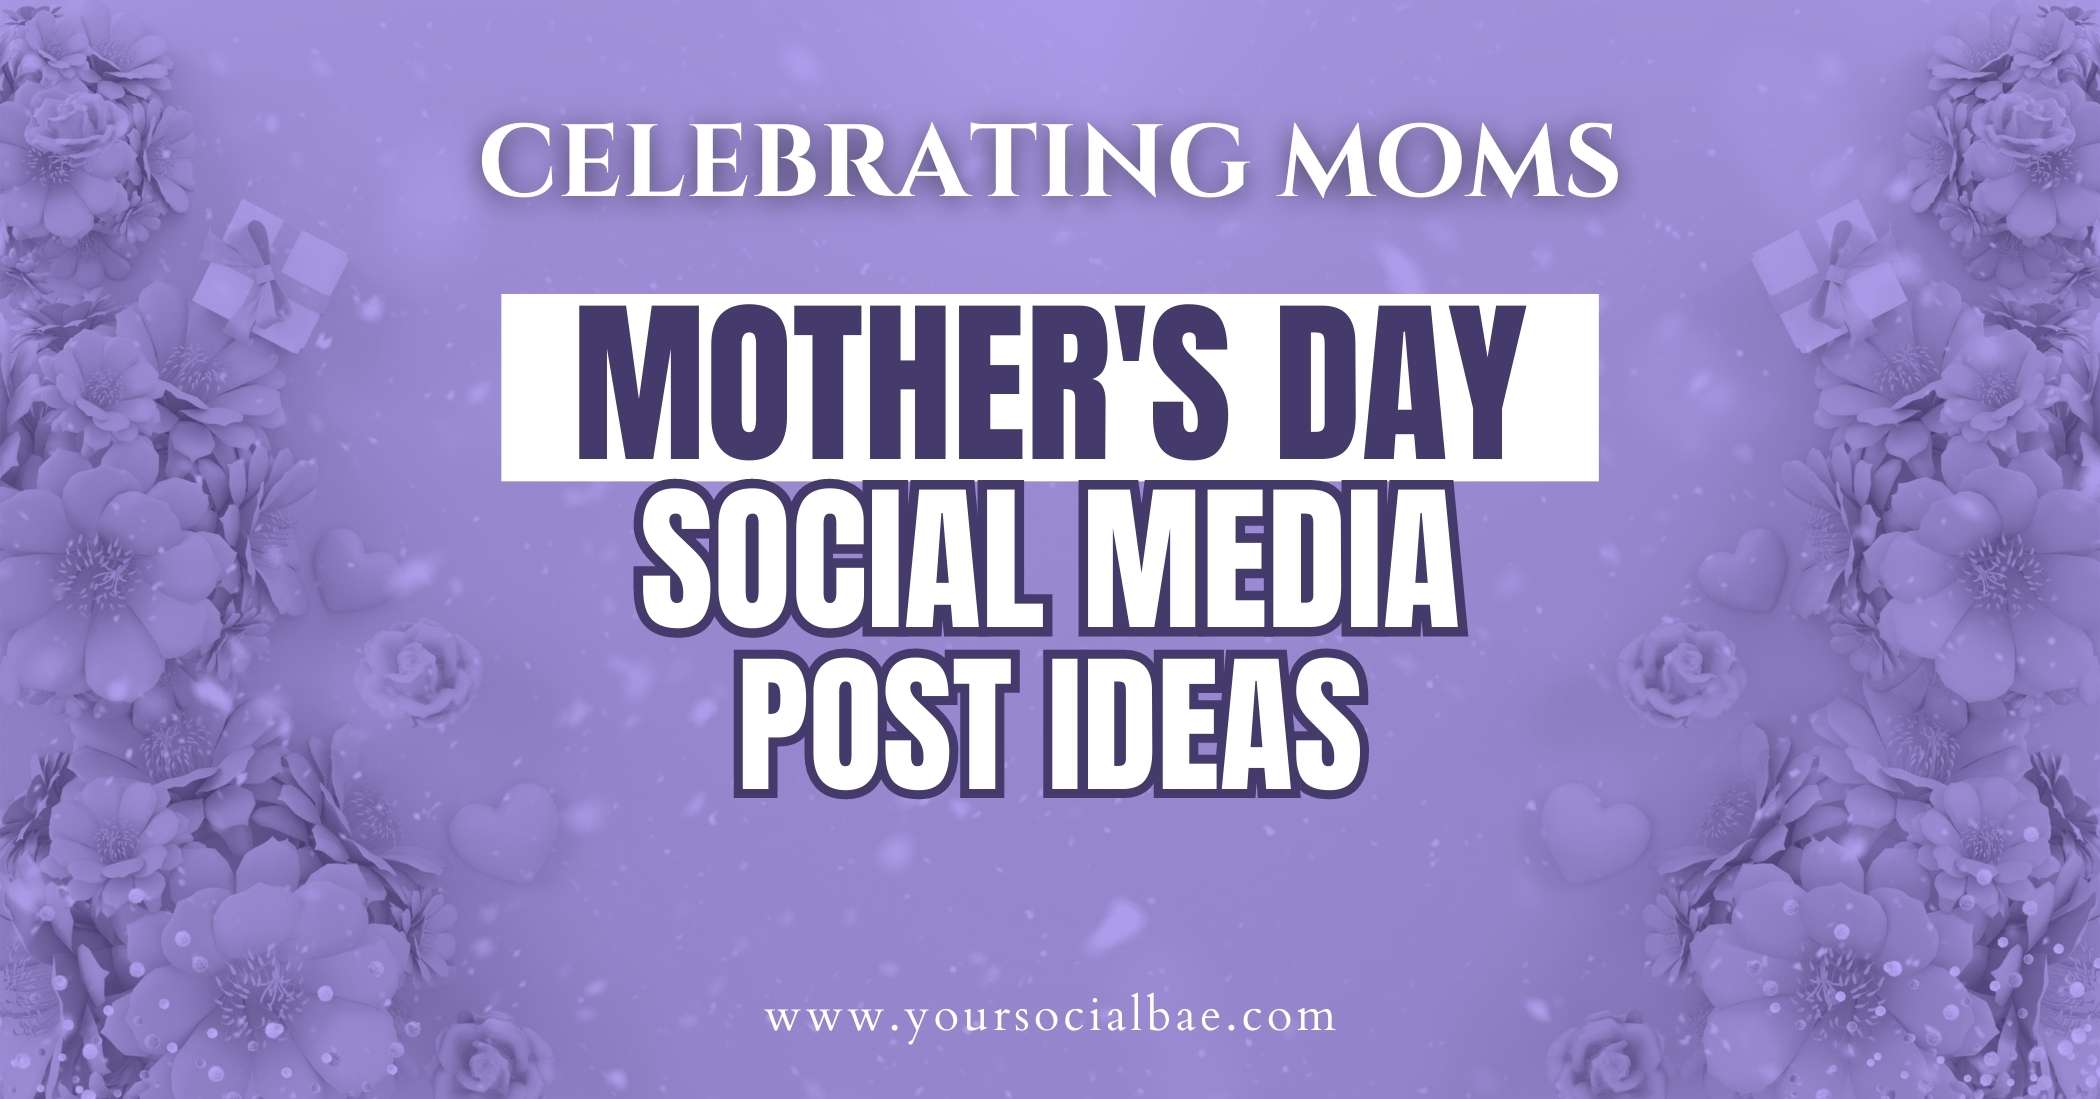 Mothers Day Social Media Post Ideas